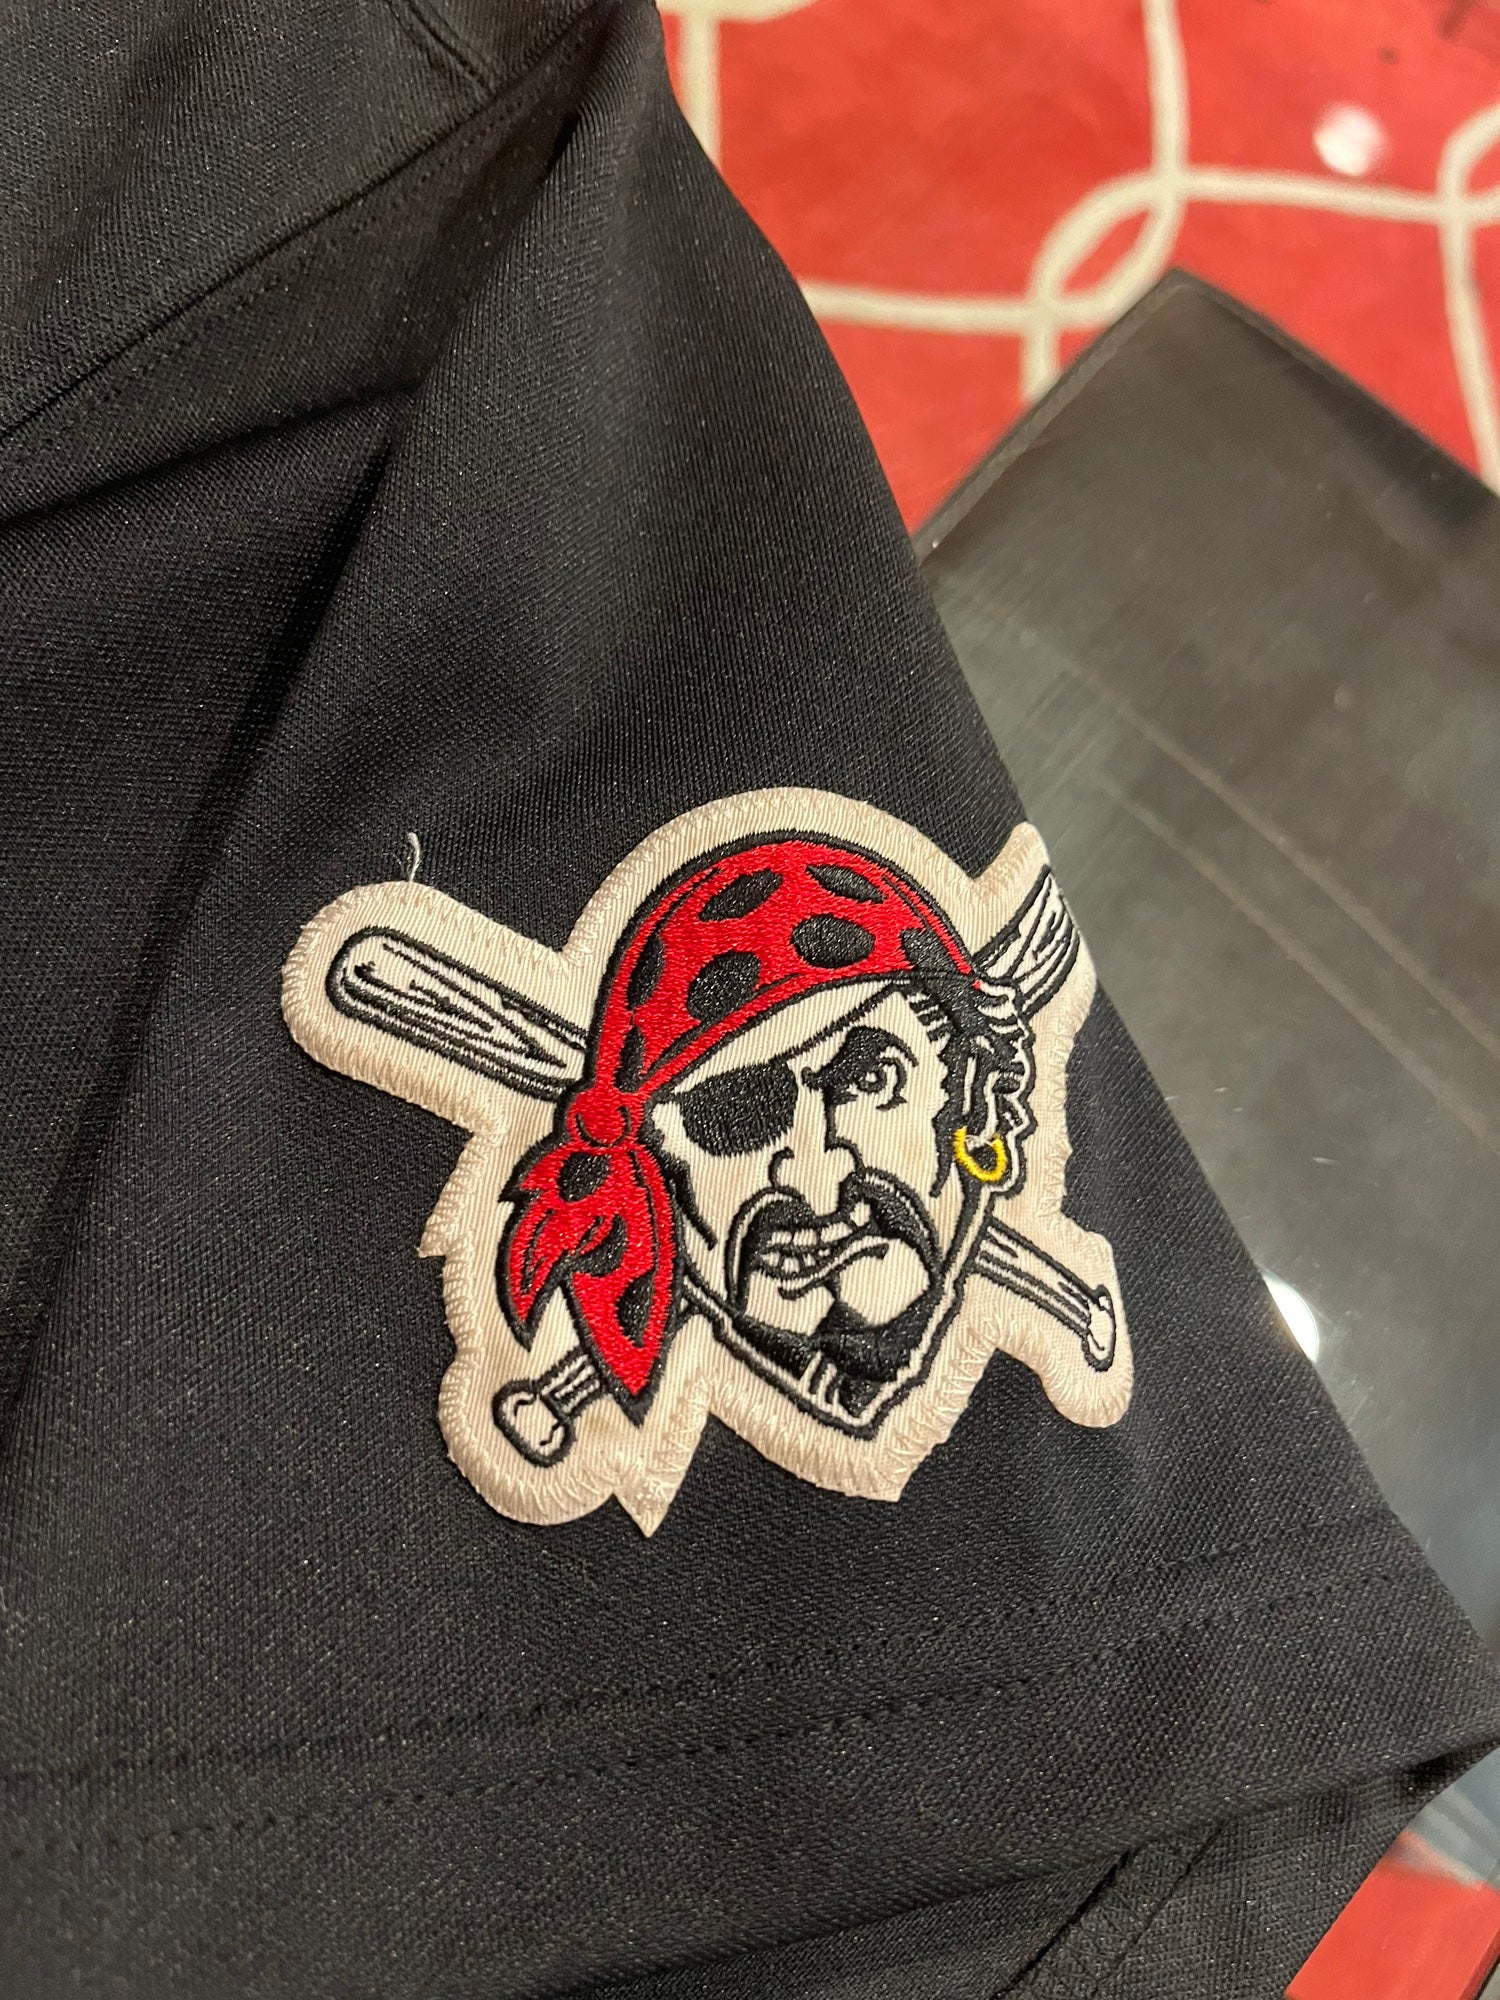 Roberto Clemente Pittsburgh Pirates Vintage Style Sleeveless Jersey – Best  Sports Jerseys